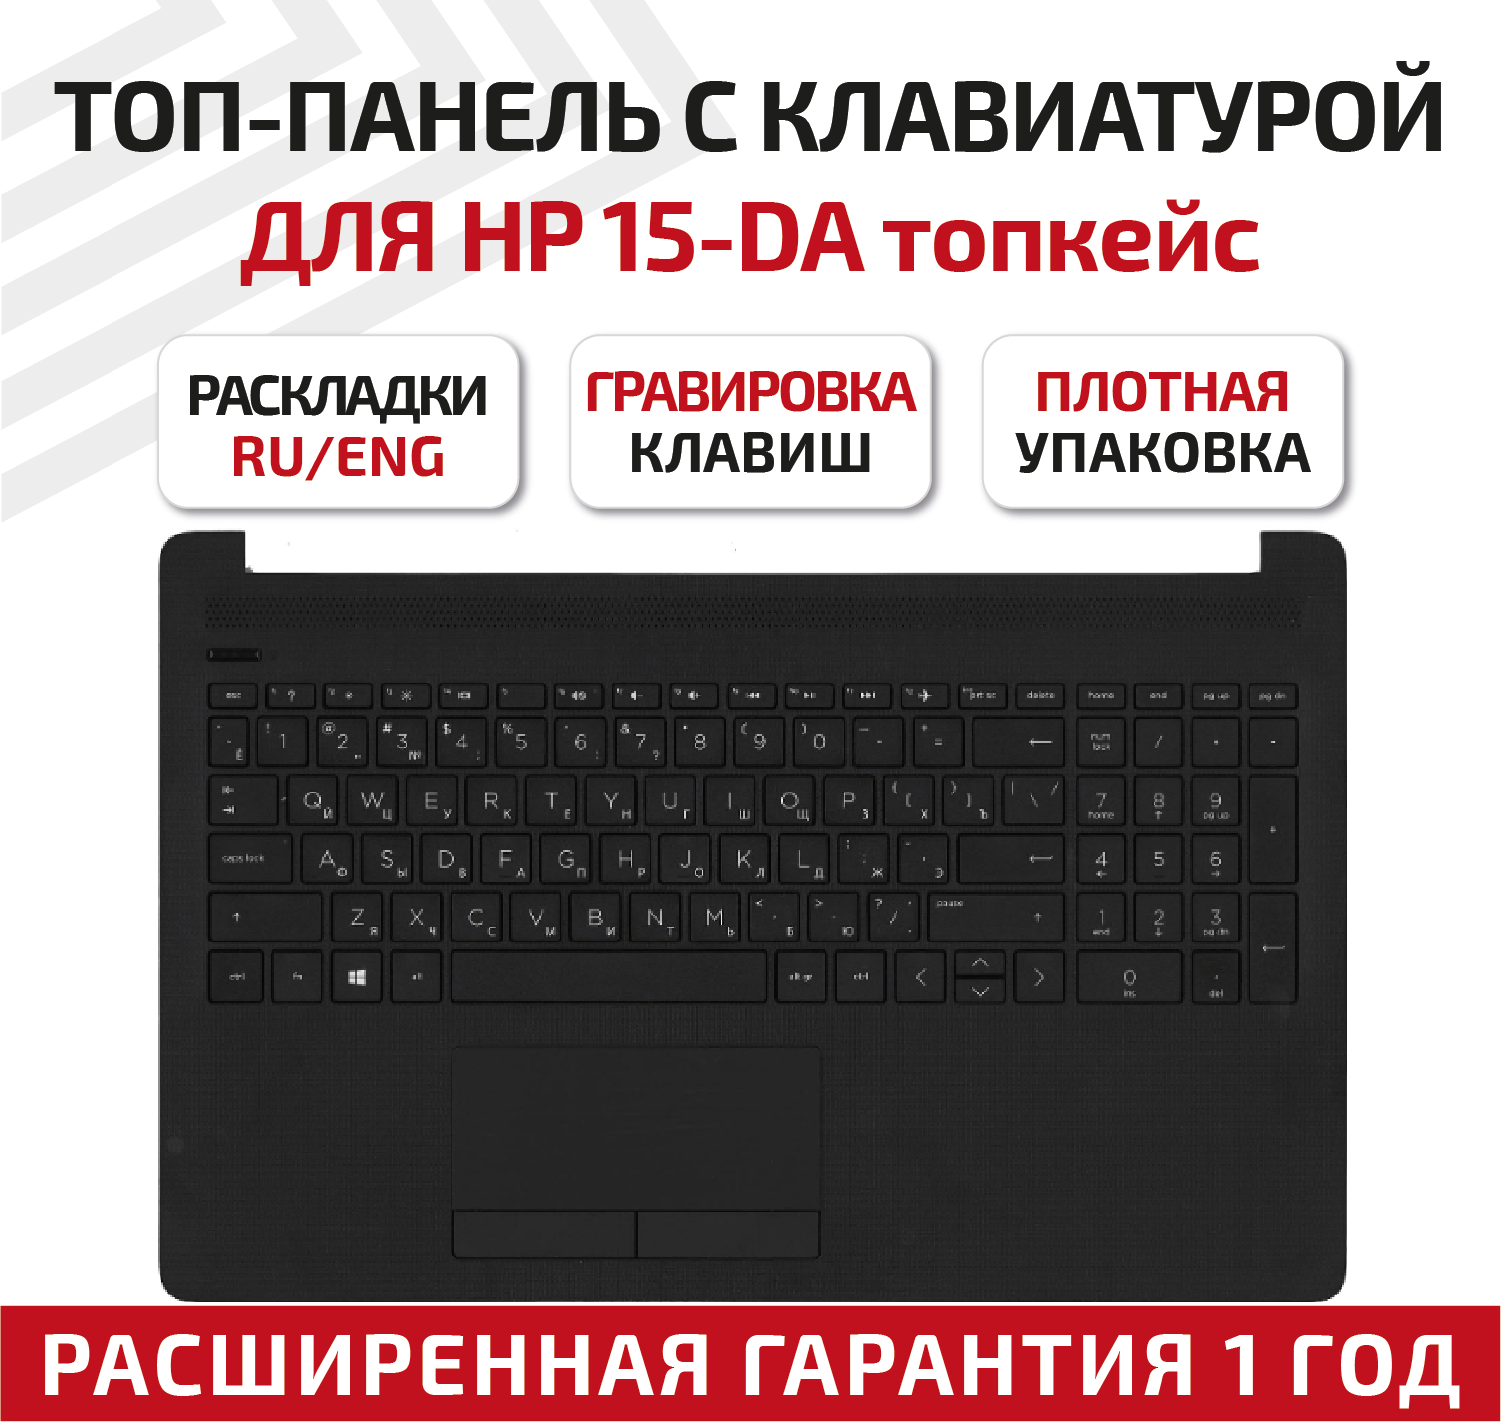 Клавиатура (keyboard) для ноутбука HP 15-DA, топкейс